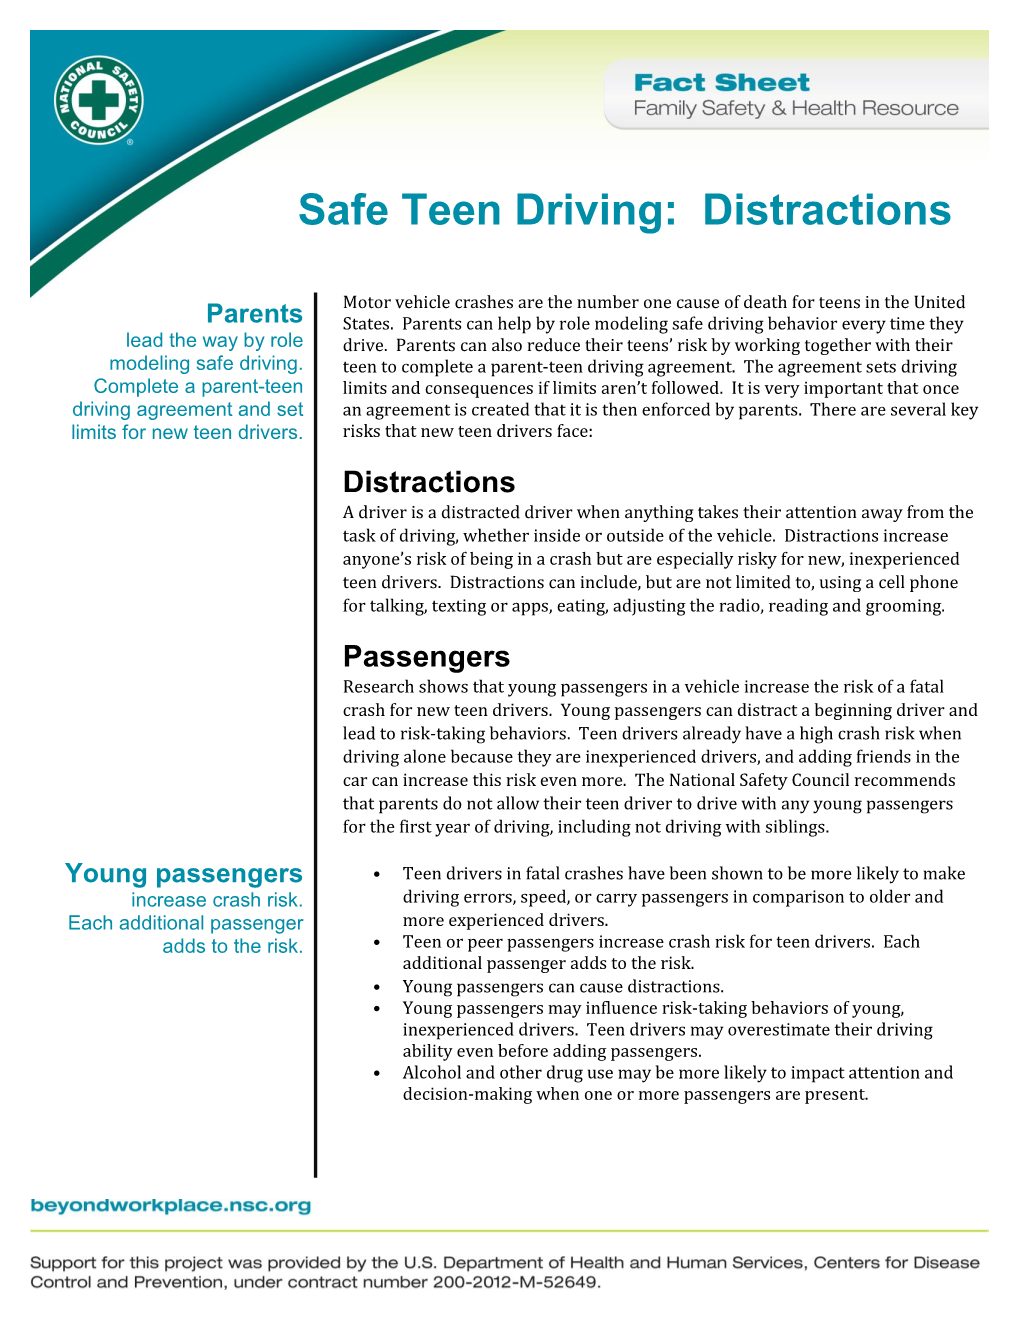 Distracted Driving Fact Sheet